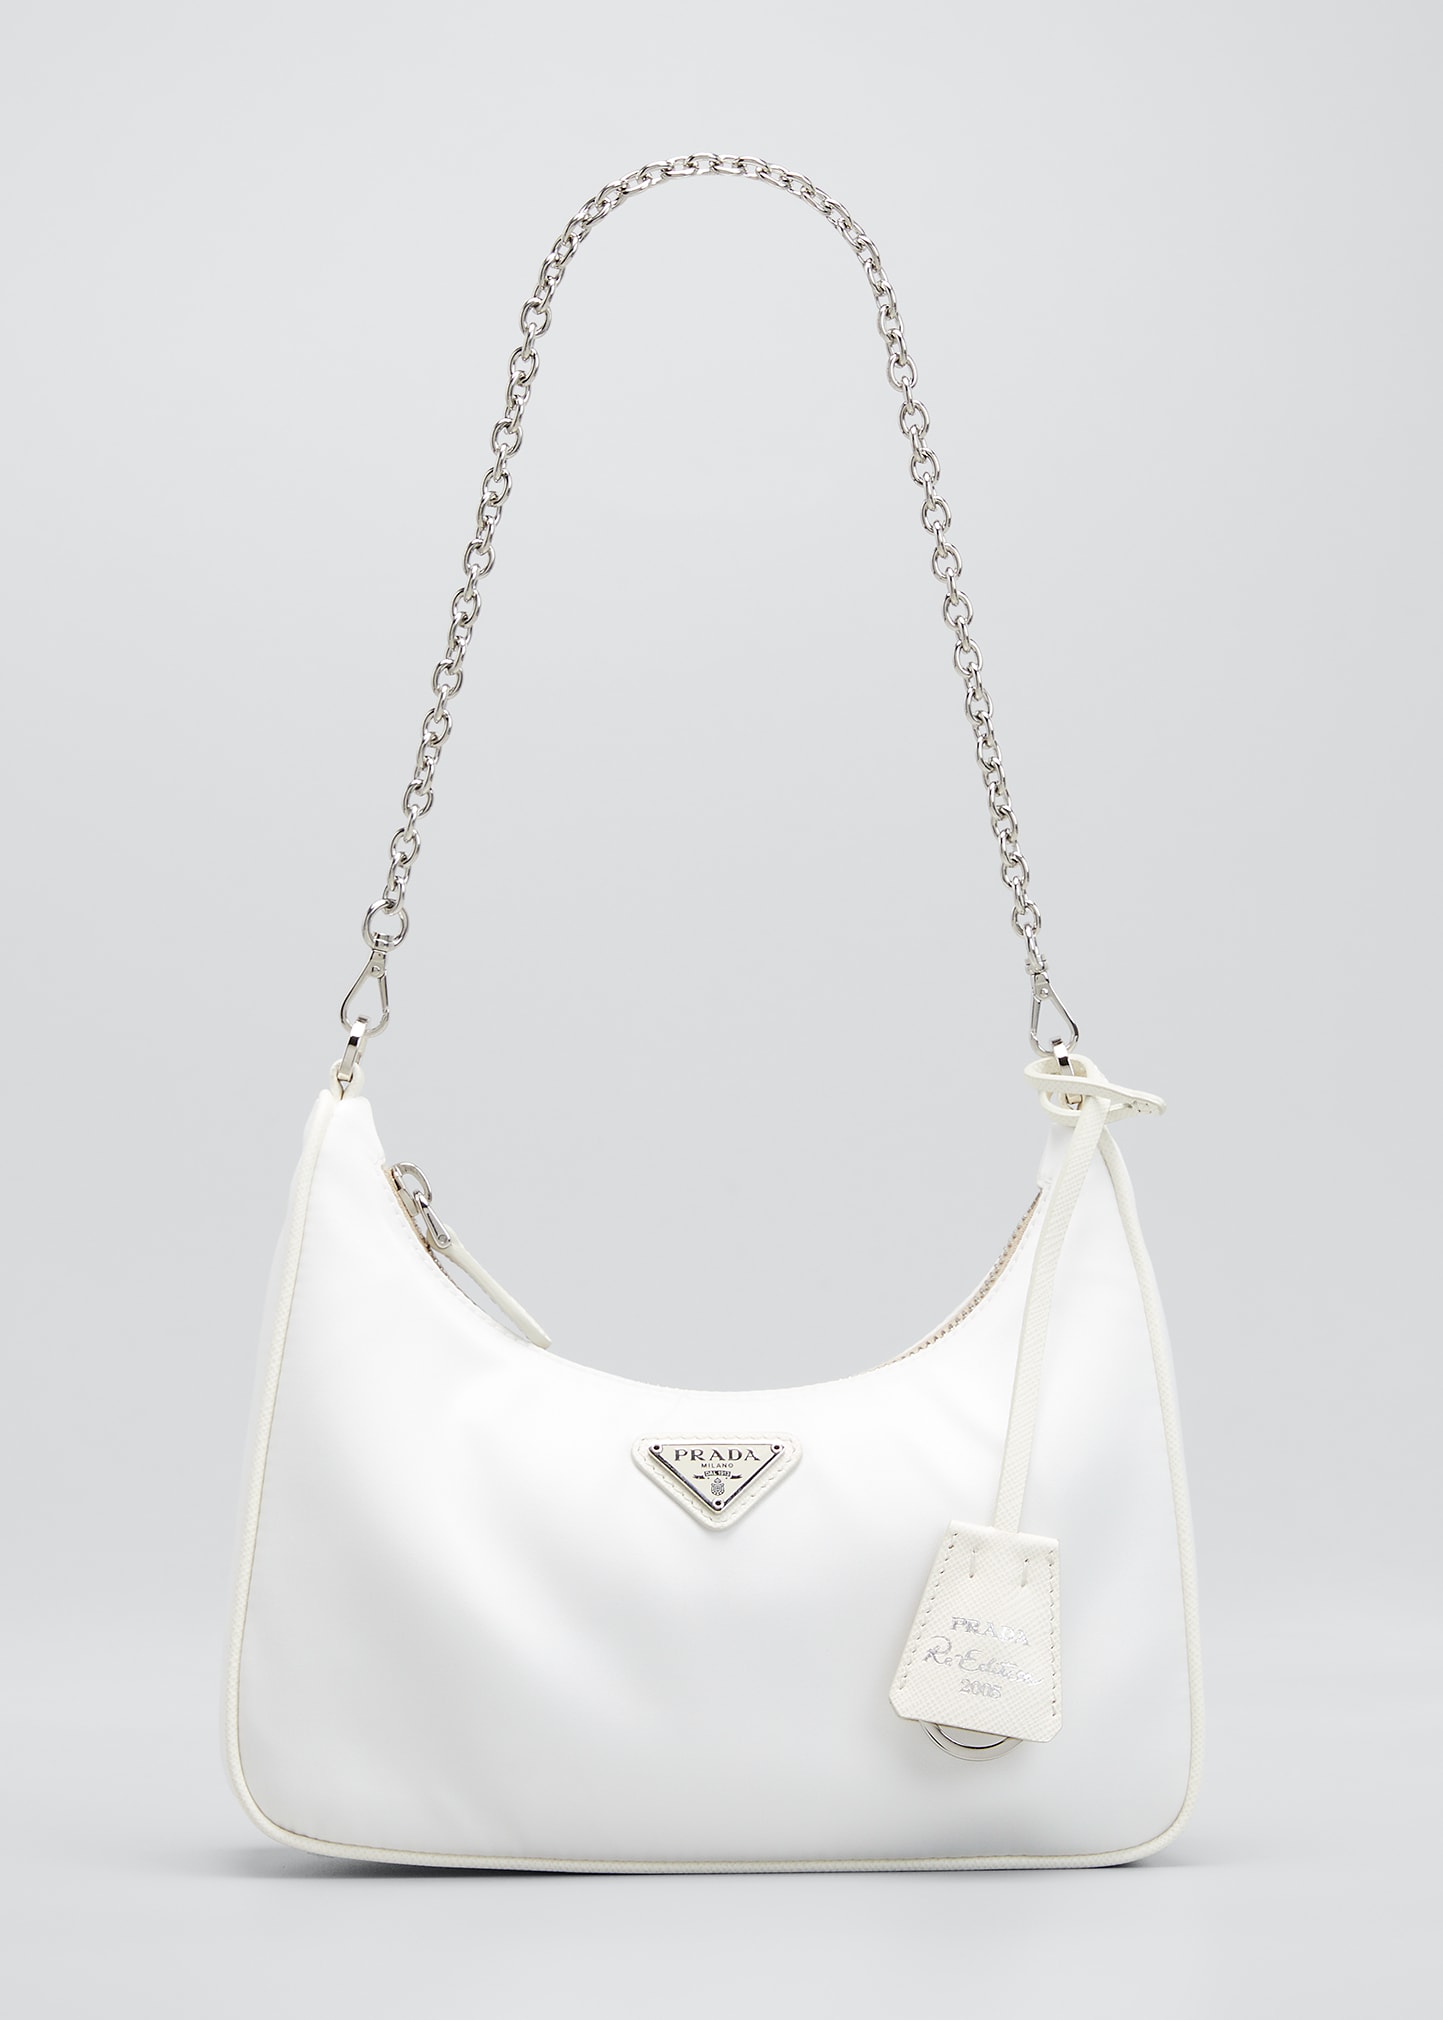 Prada Re-edition 2005 Nylon Chain Shoulder Bag In White | ModeSens